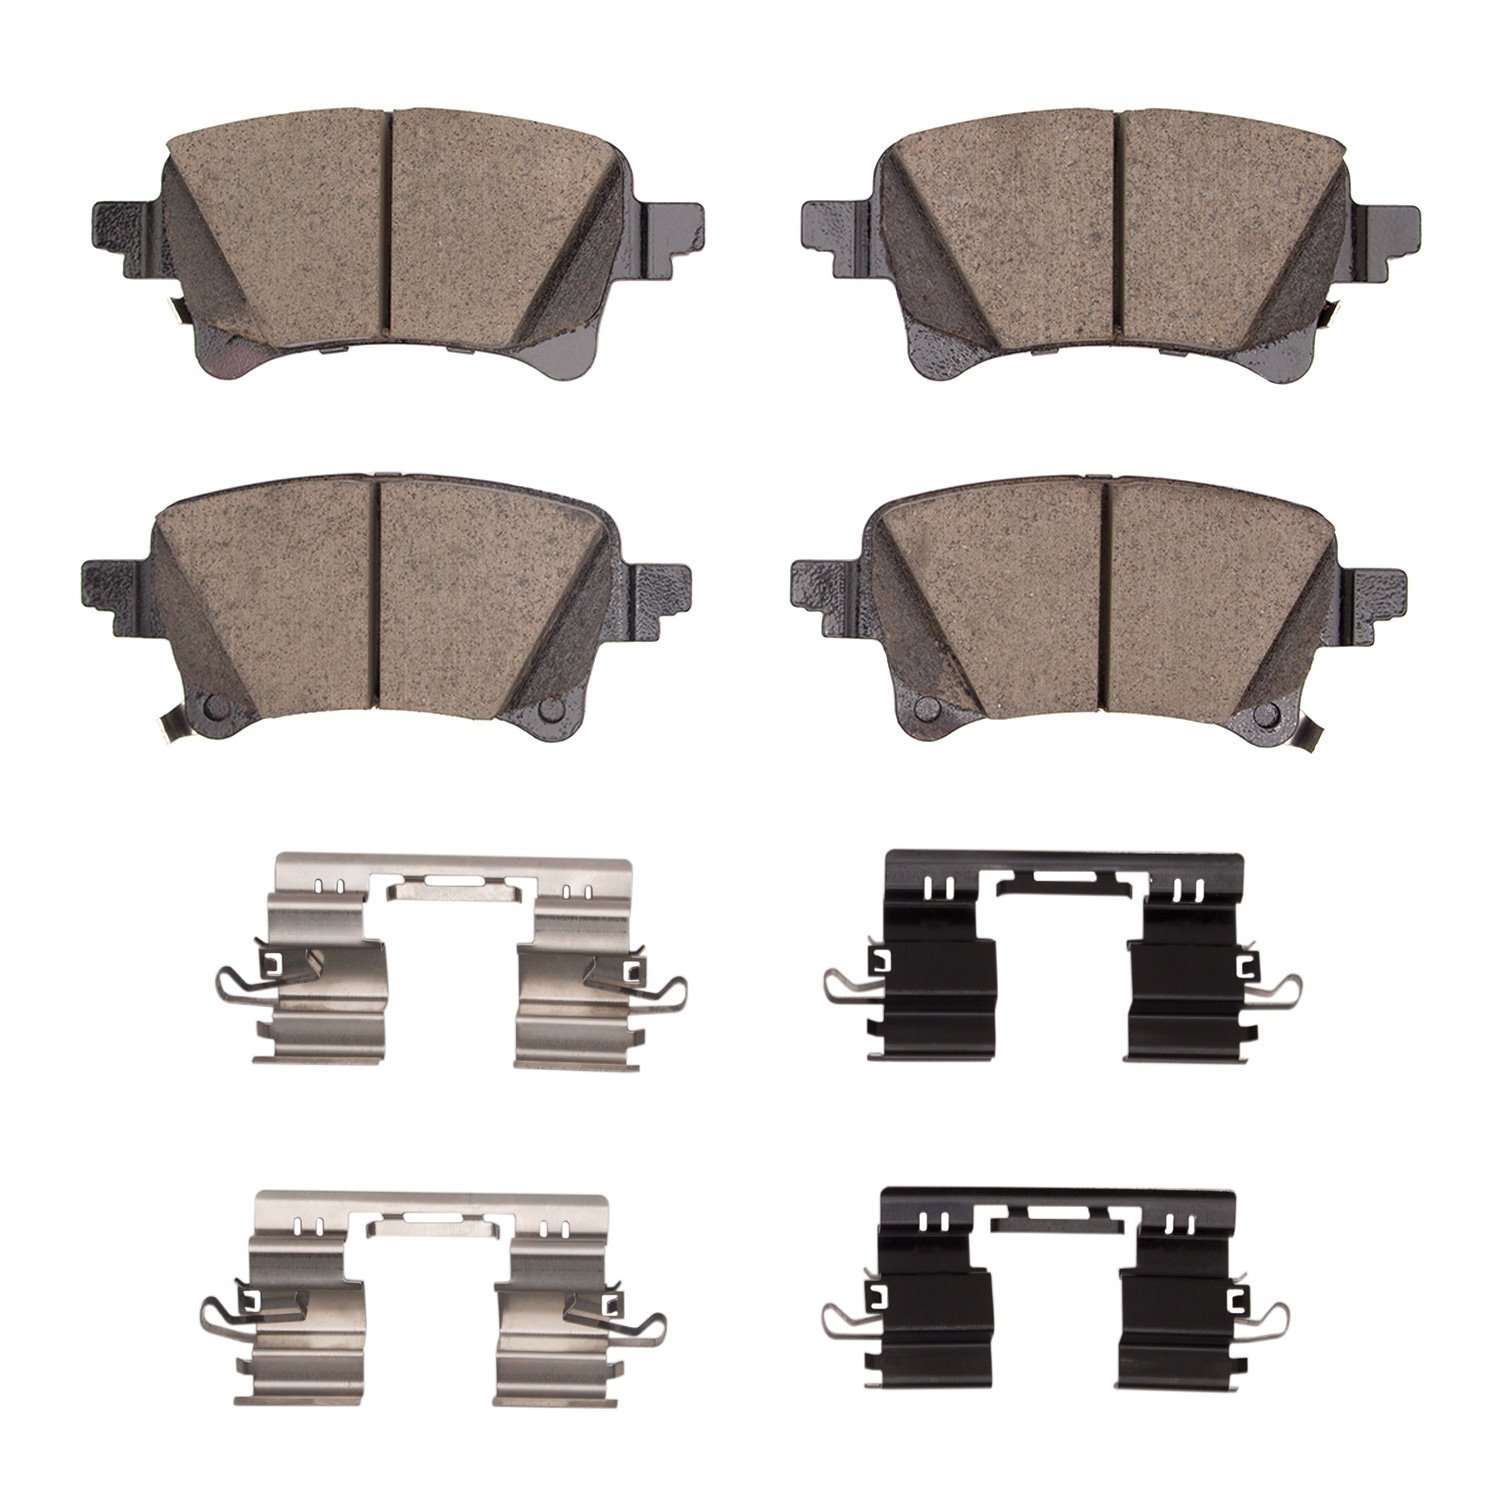 1310-2233-01 3000-Series Ceramic Brake Pads & Hardware Kit, Fits Select Mopar, Position: Rear